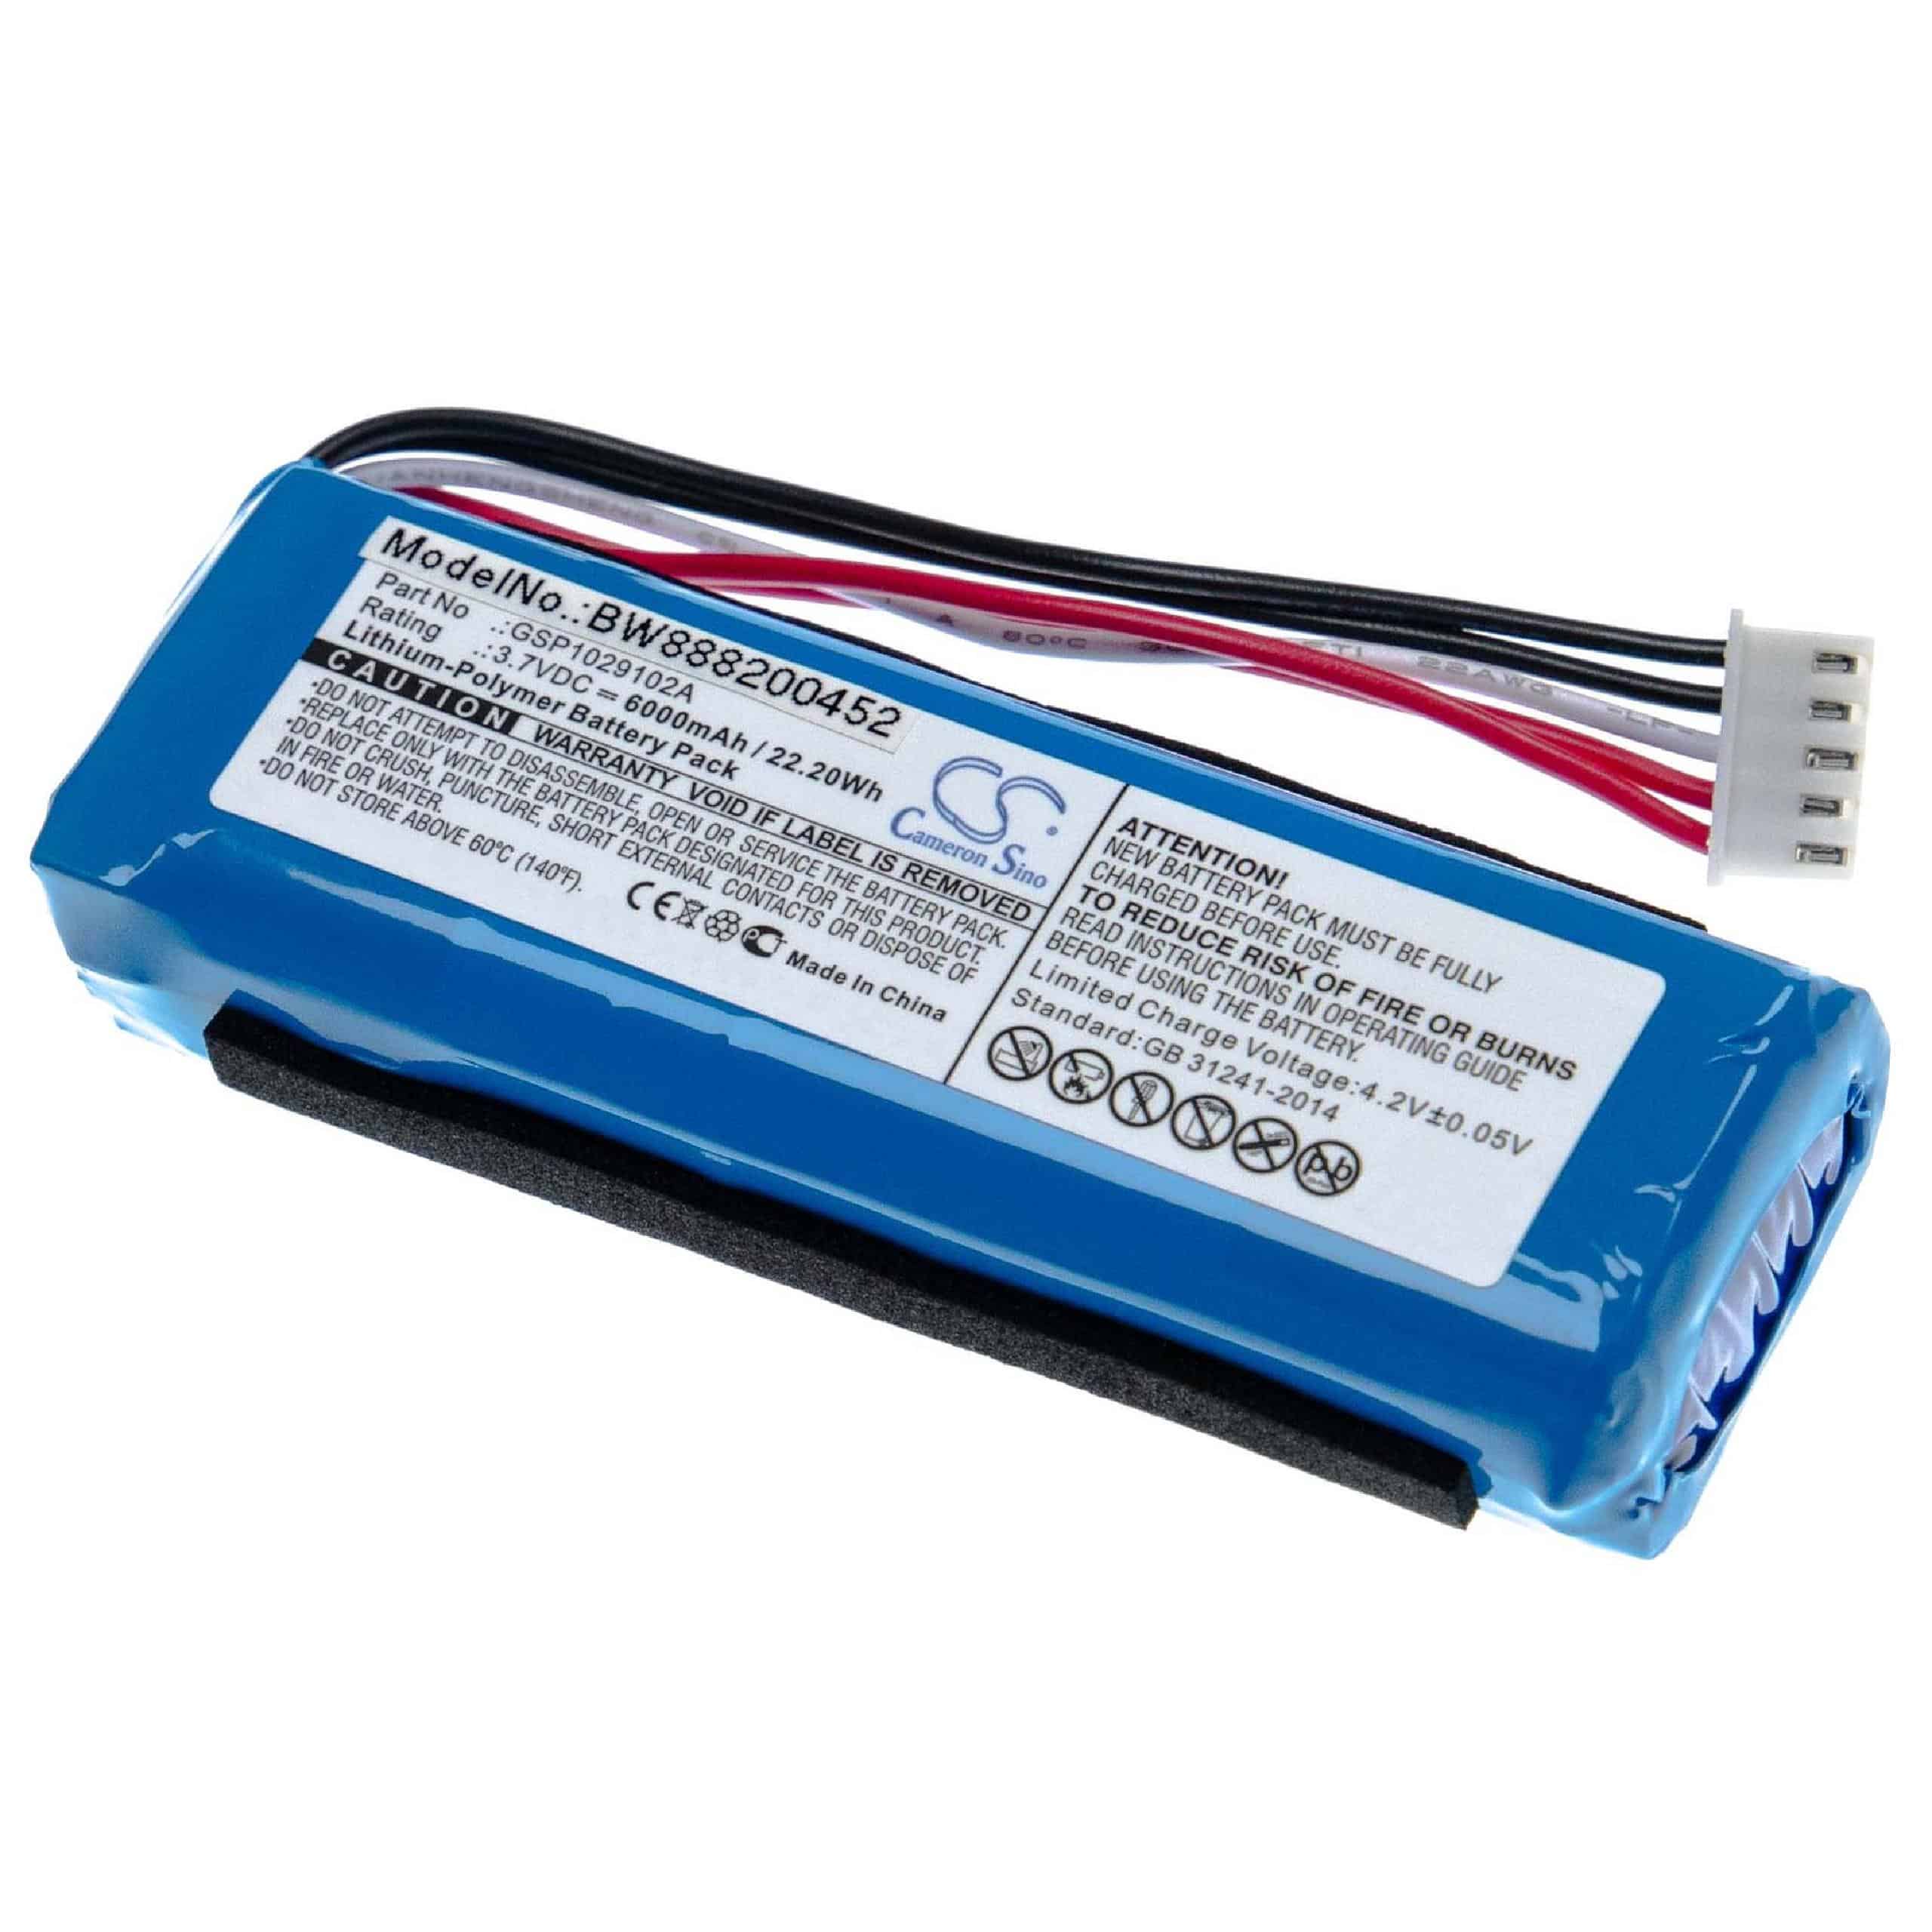  Battery replaces JBL GSP1029102A (version 2) for JBLLoudspeaker - Li-polymer 6000 mAh